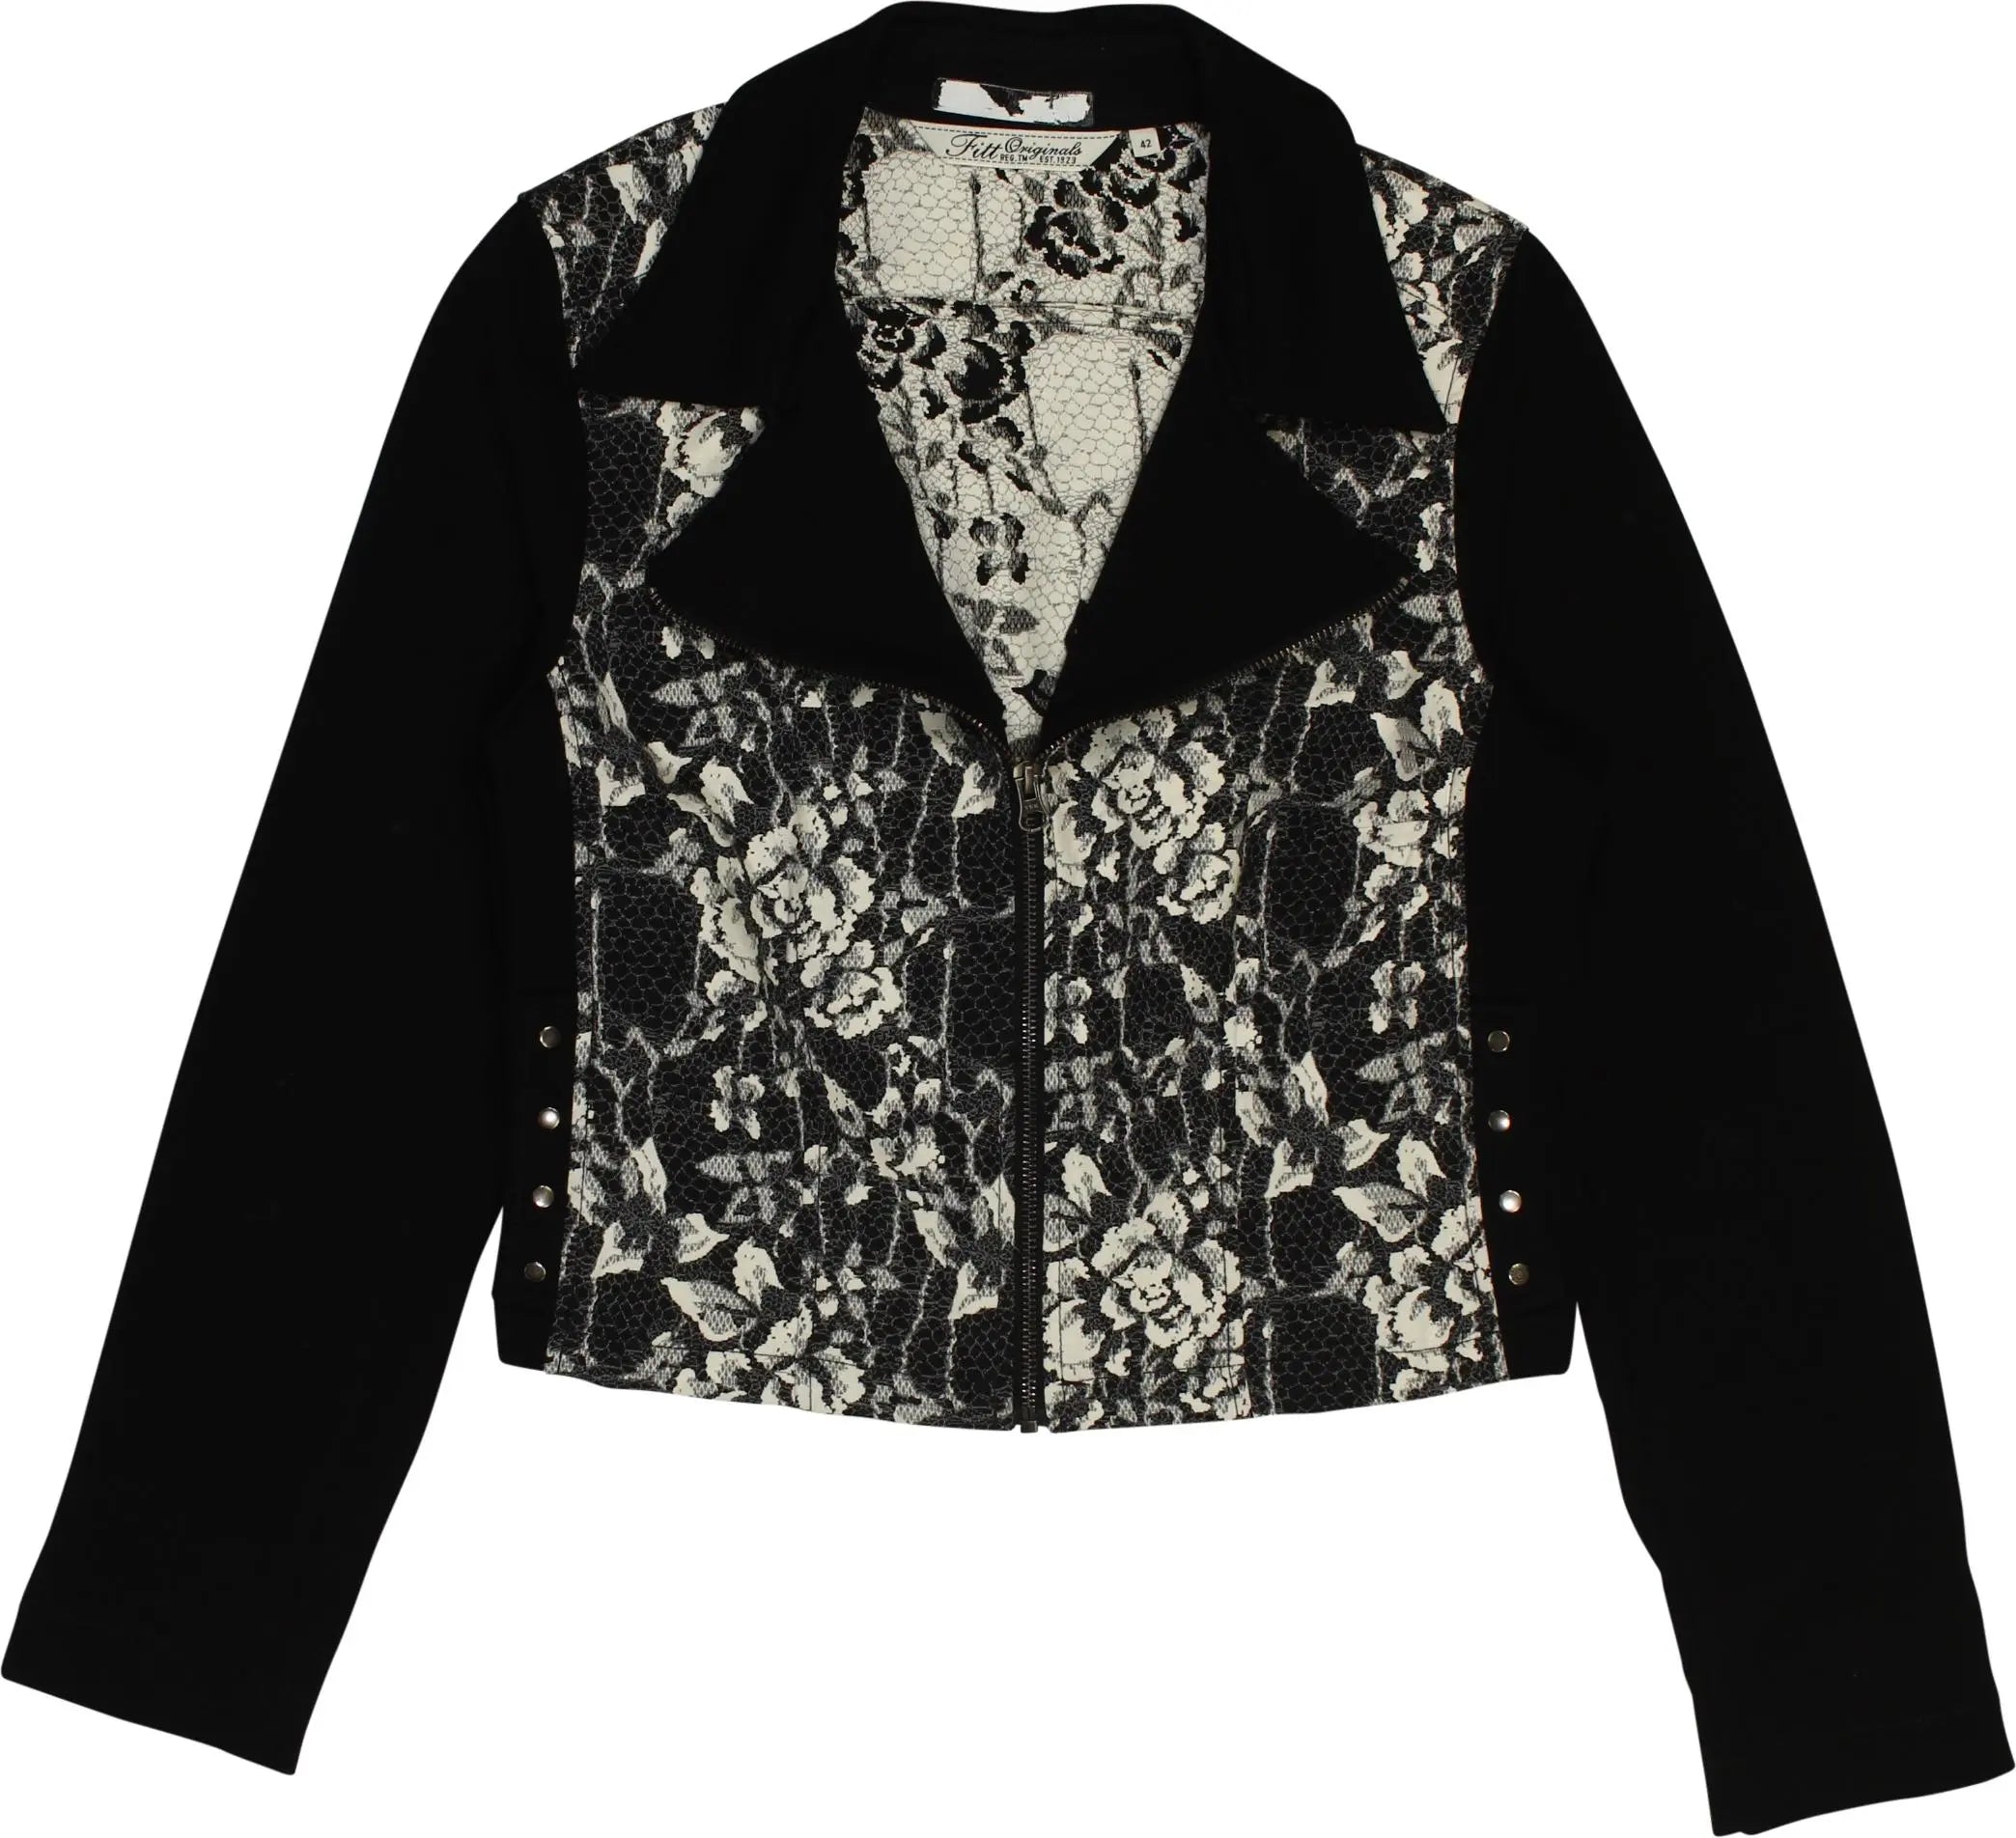 Fitt Originals - Jacket- ThriftTale.com - Vintage and second handclothing